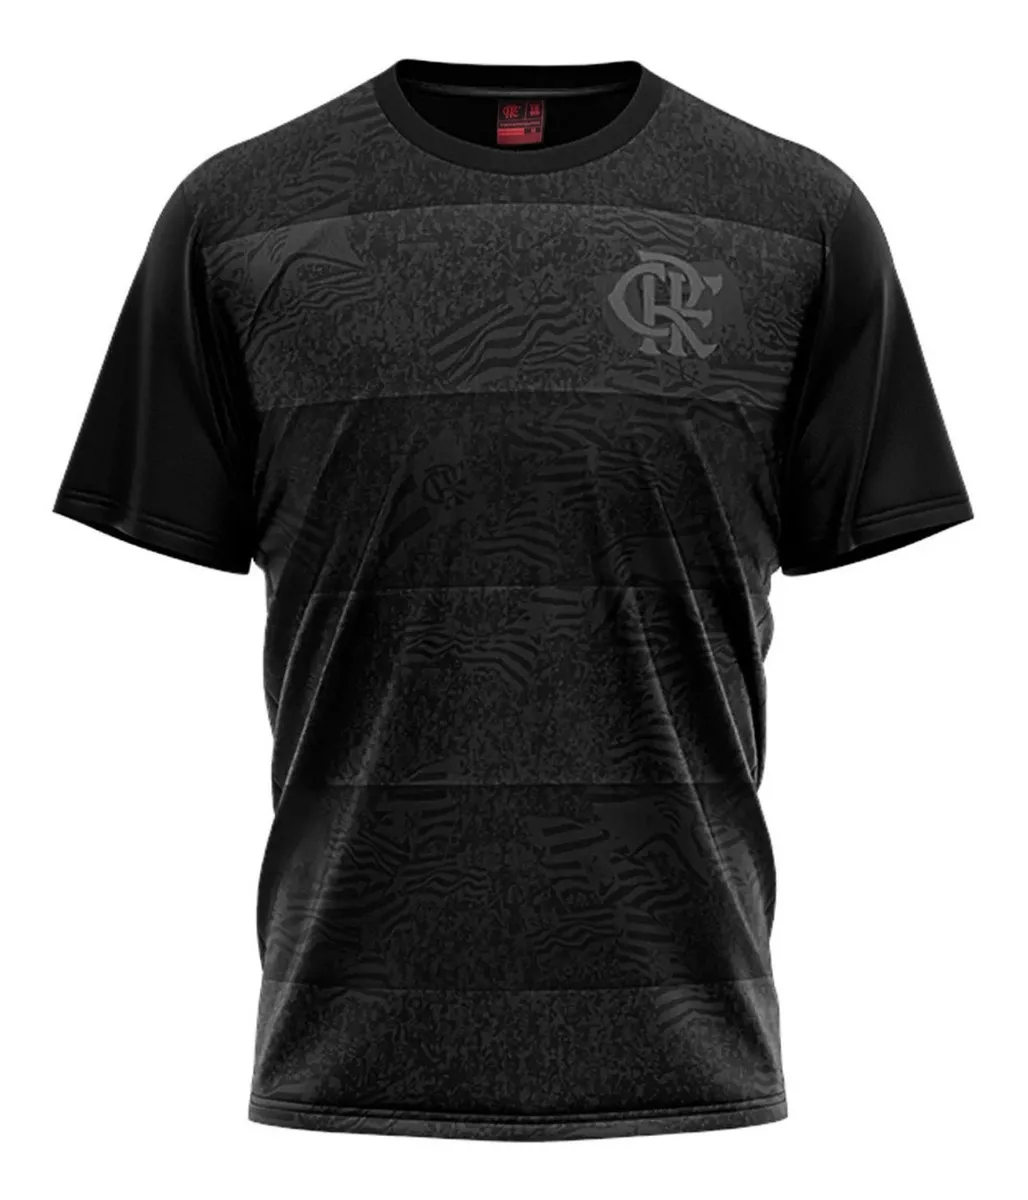 Camisa Flamengo Braziline Confirm Oficial Licenciada + Nf